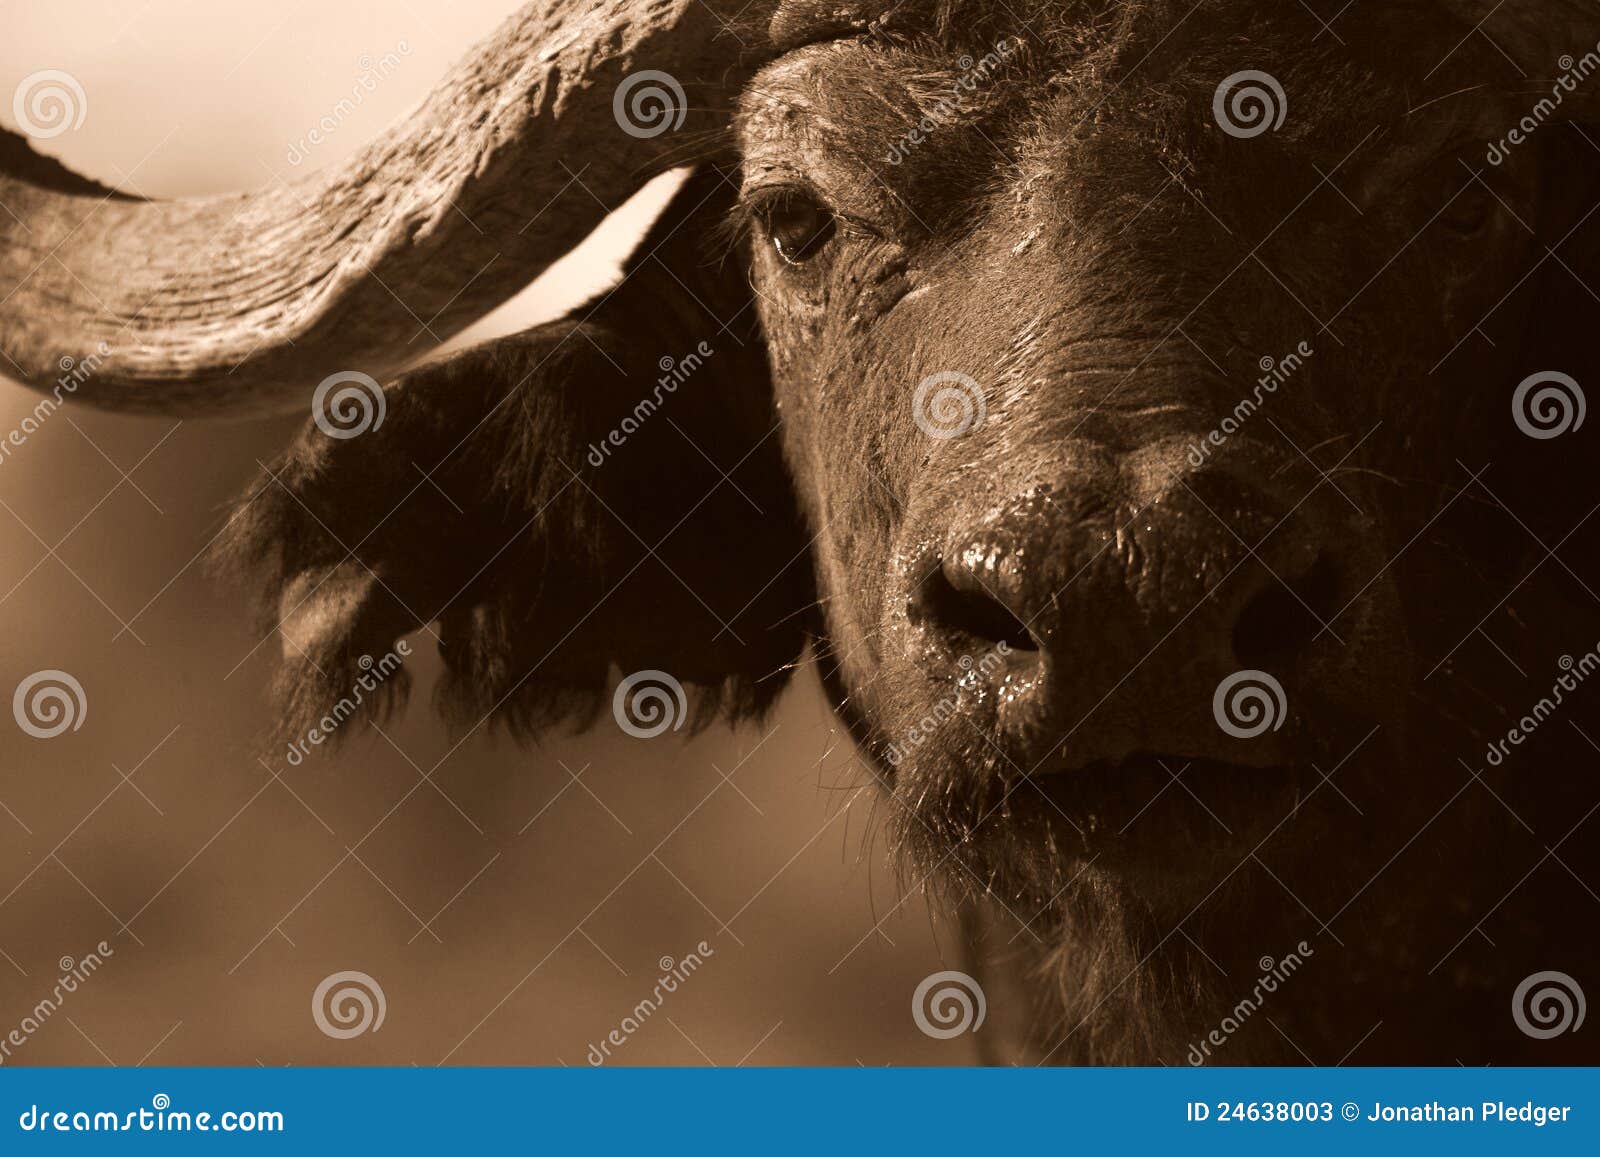 monochrome portrait of buffalo face